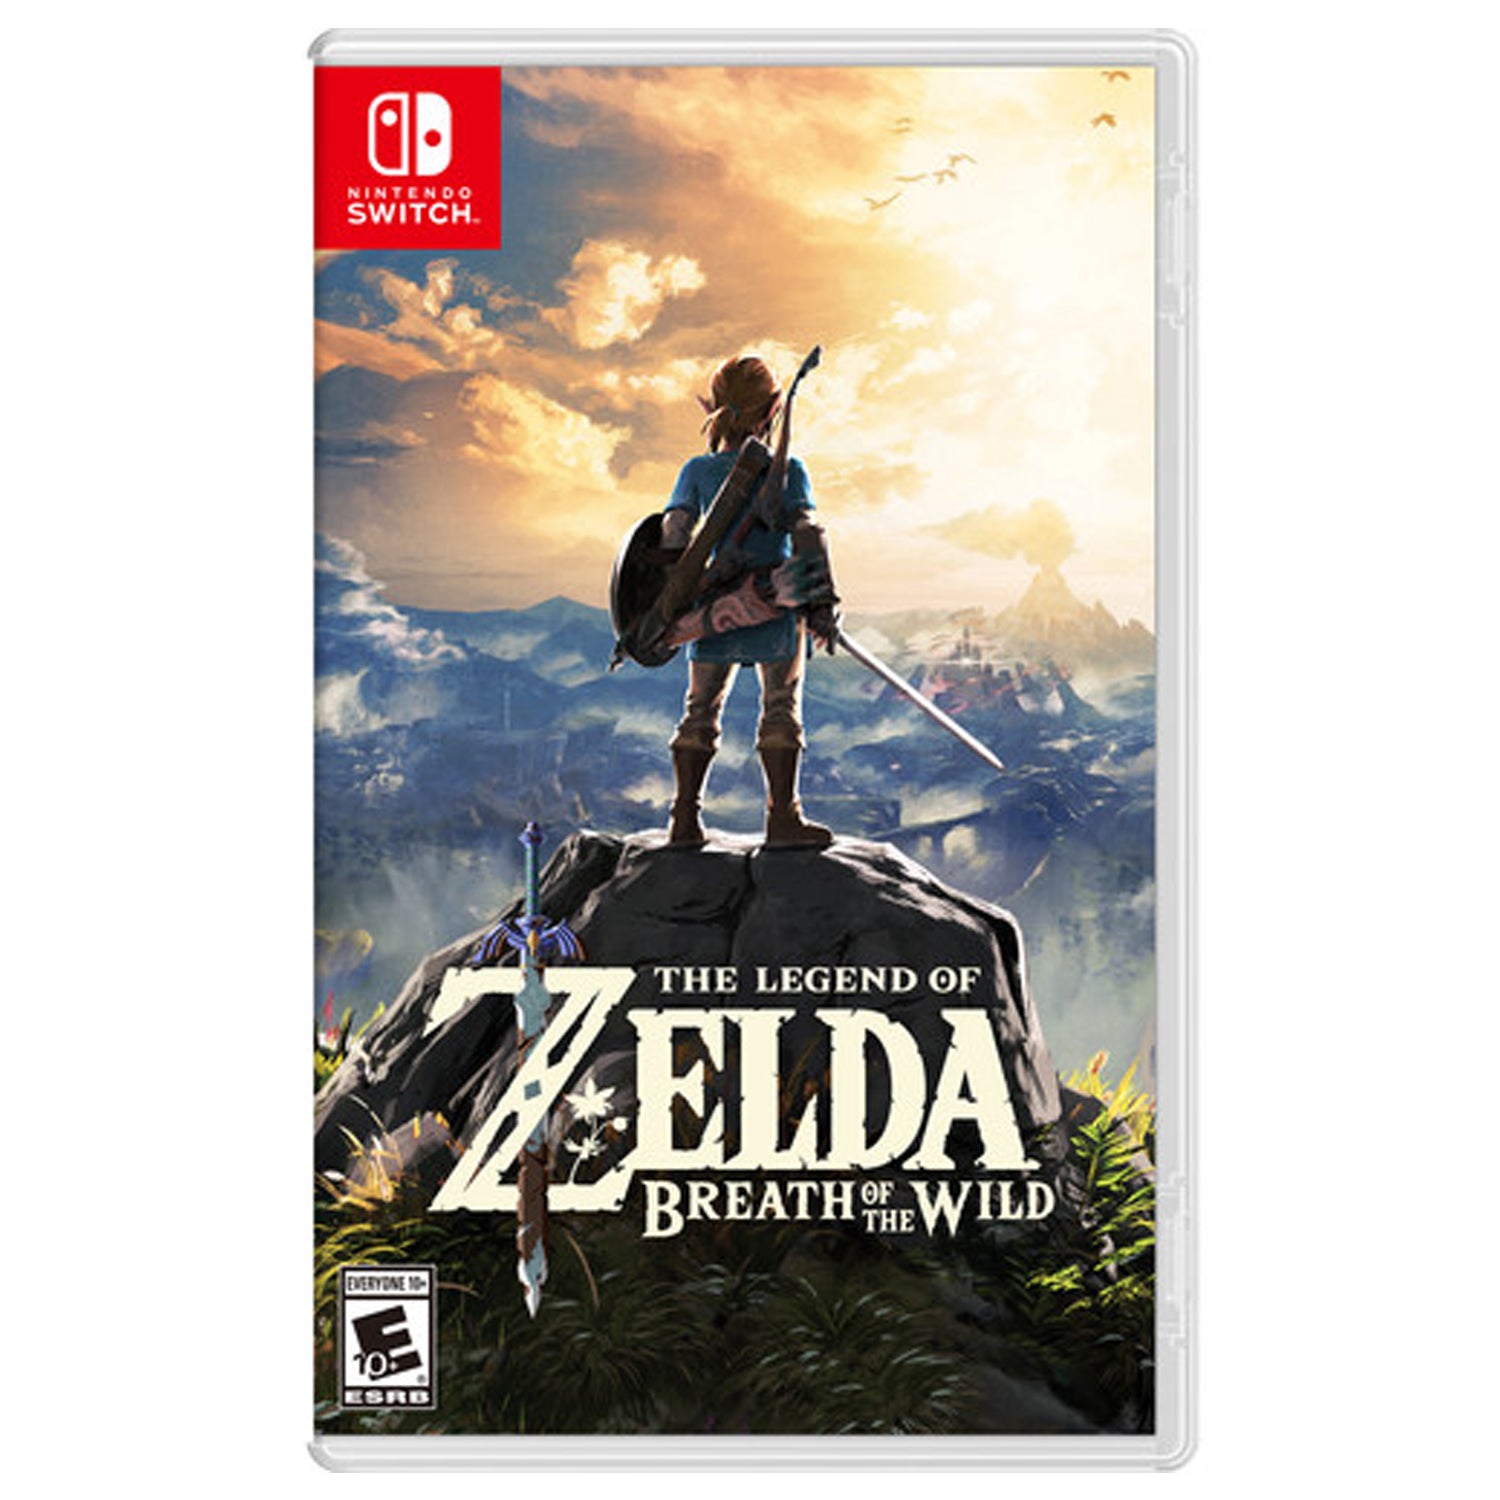 No More Heroes 3 Bundle with Zelda: Breath of the Wild - Nintendo Switch